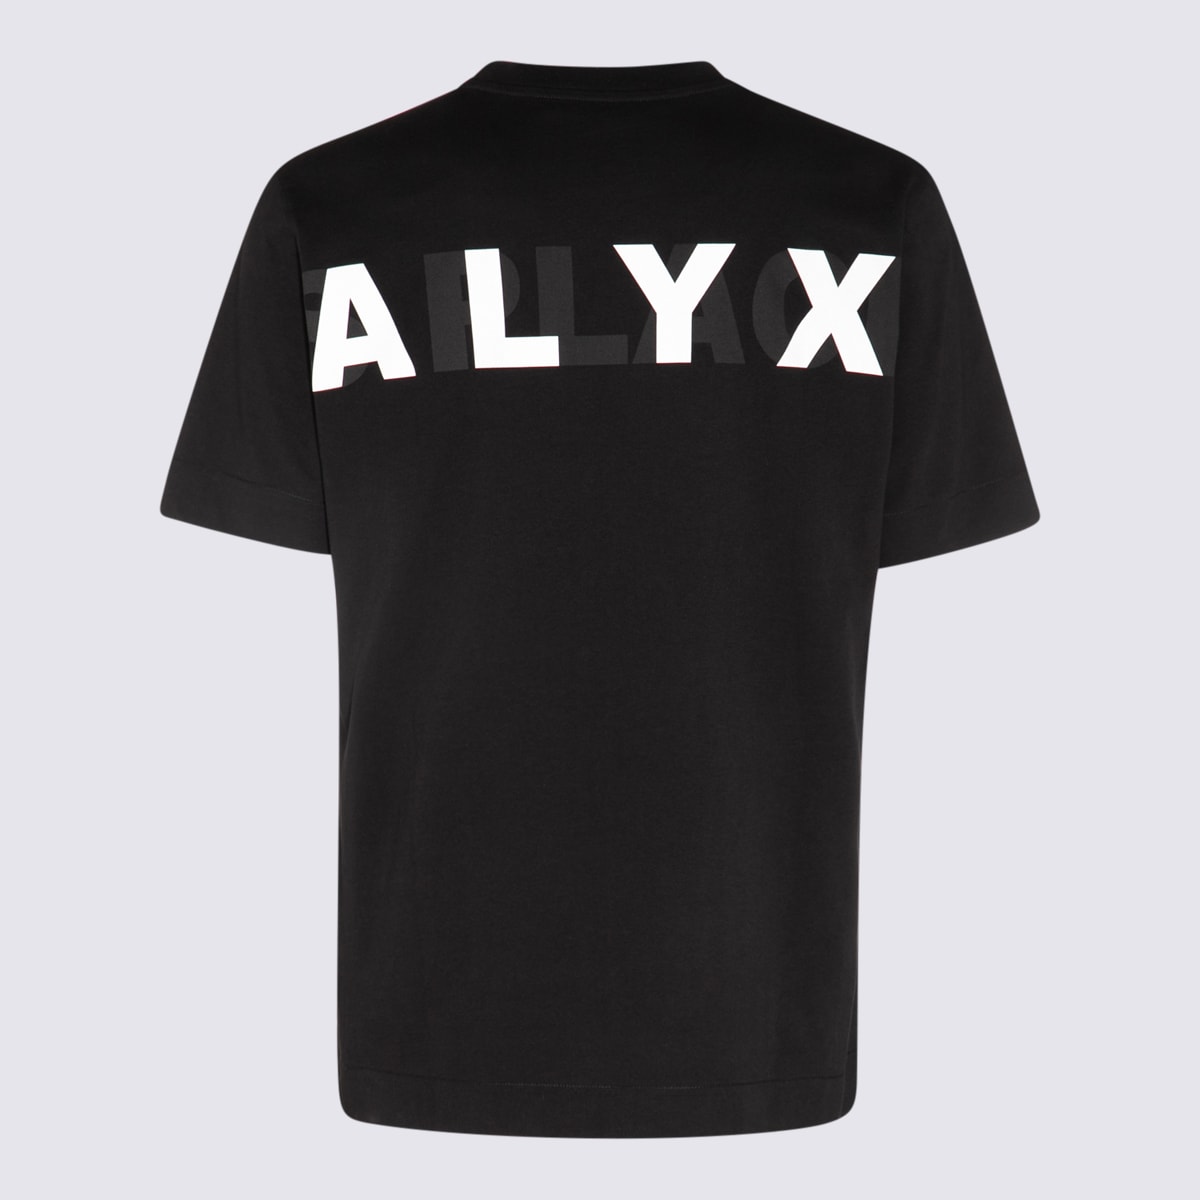 Alyx Black Cotton T-shirt